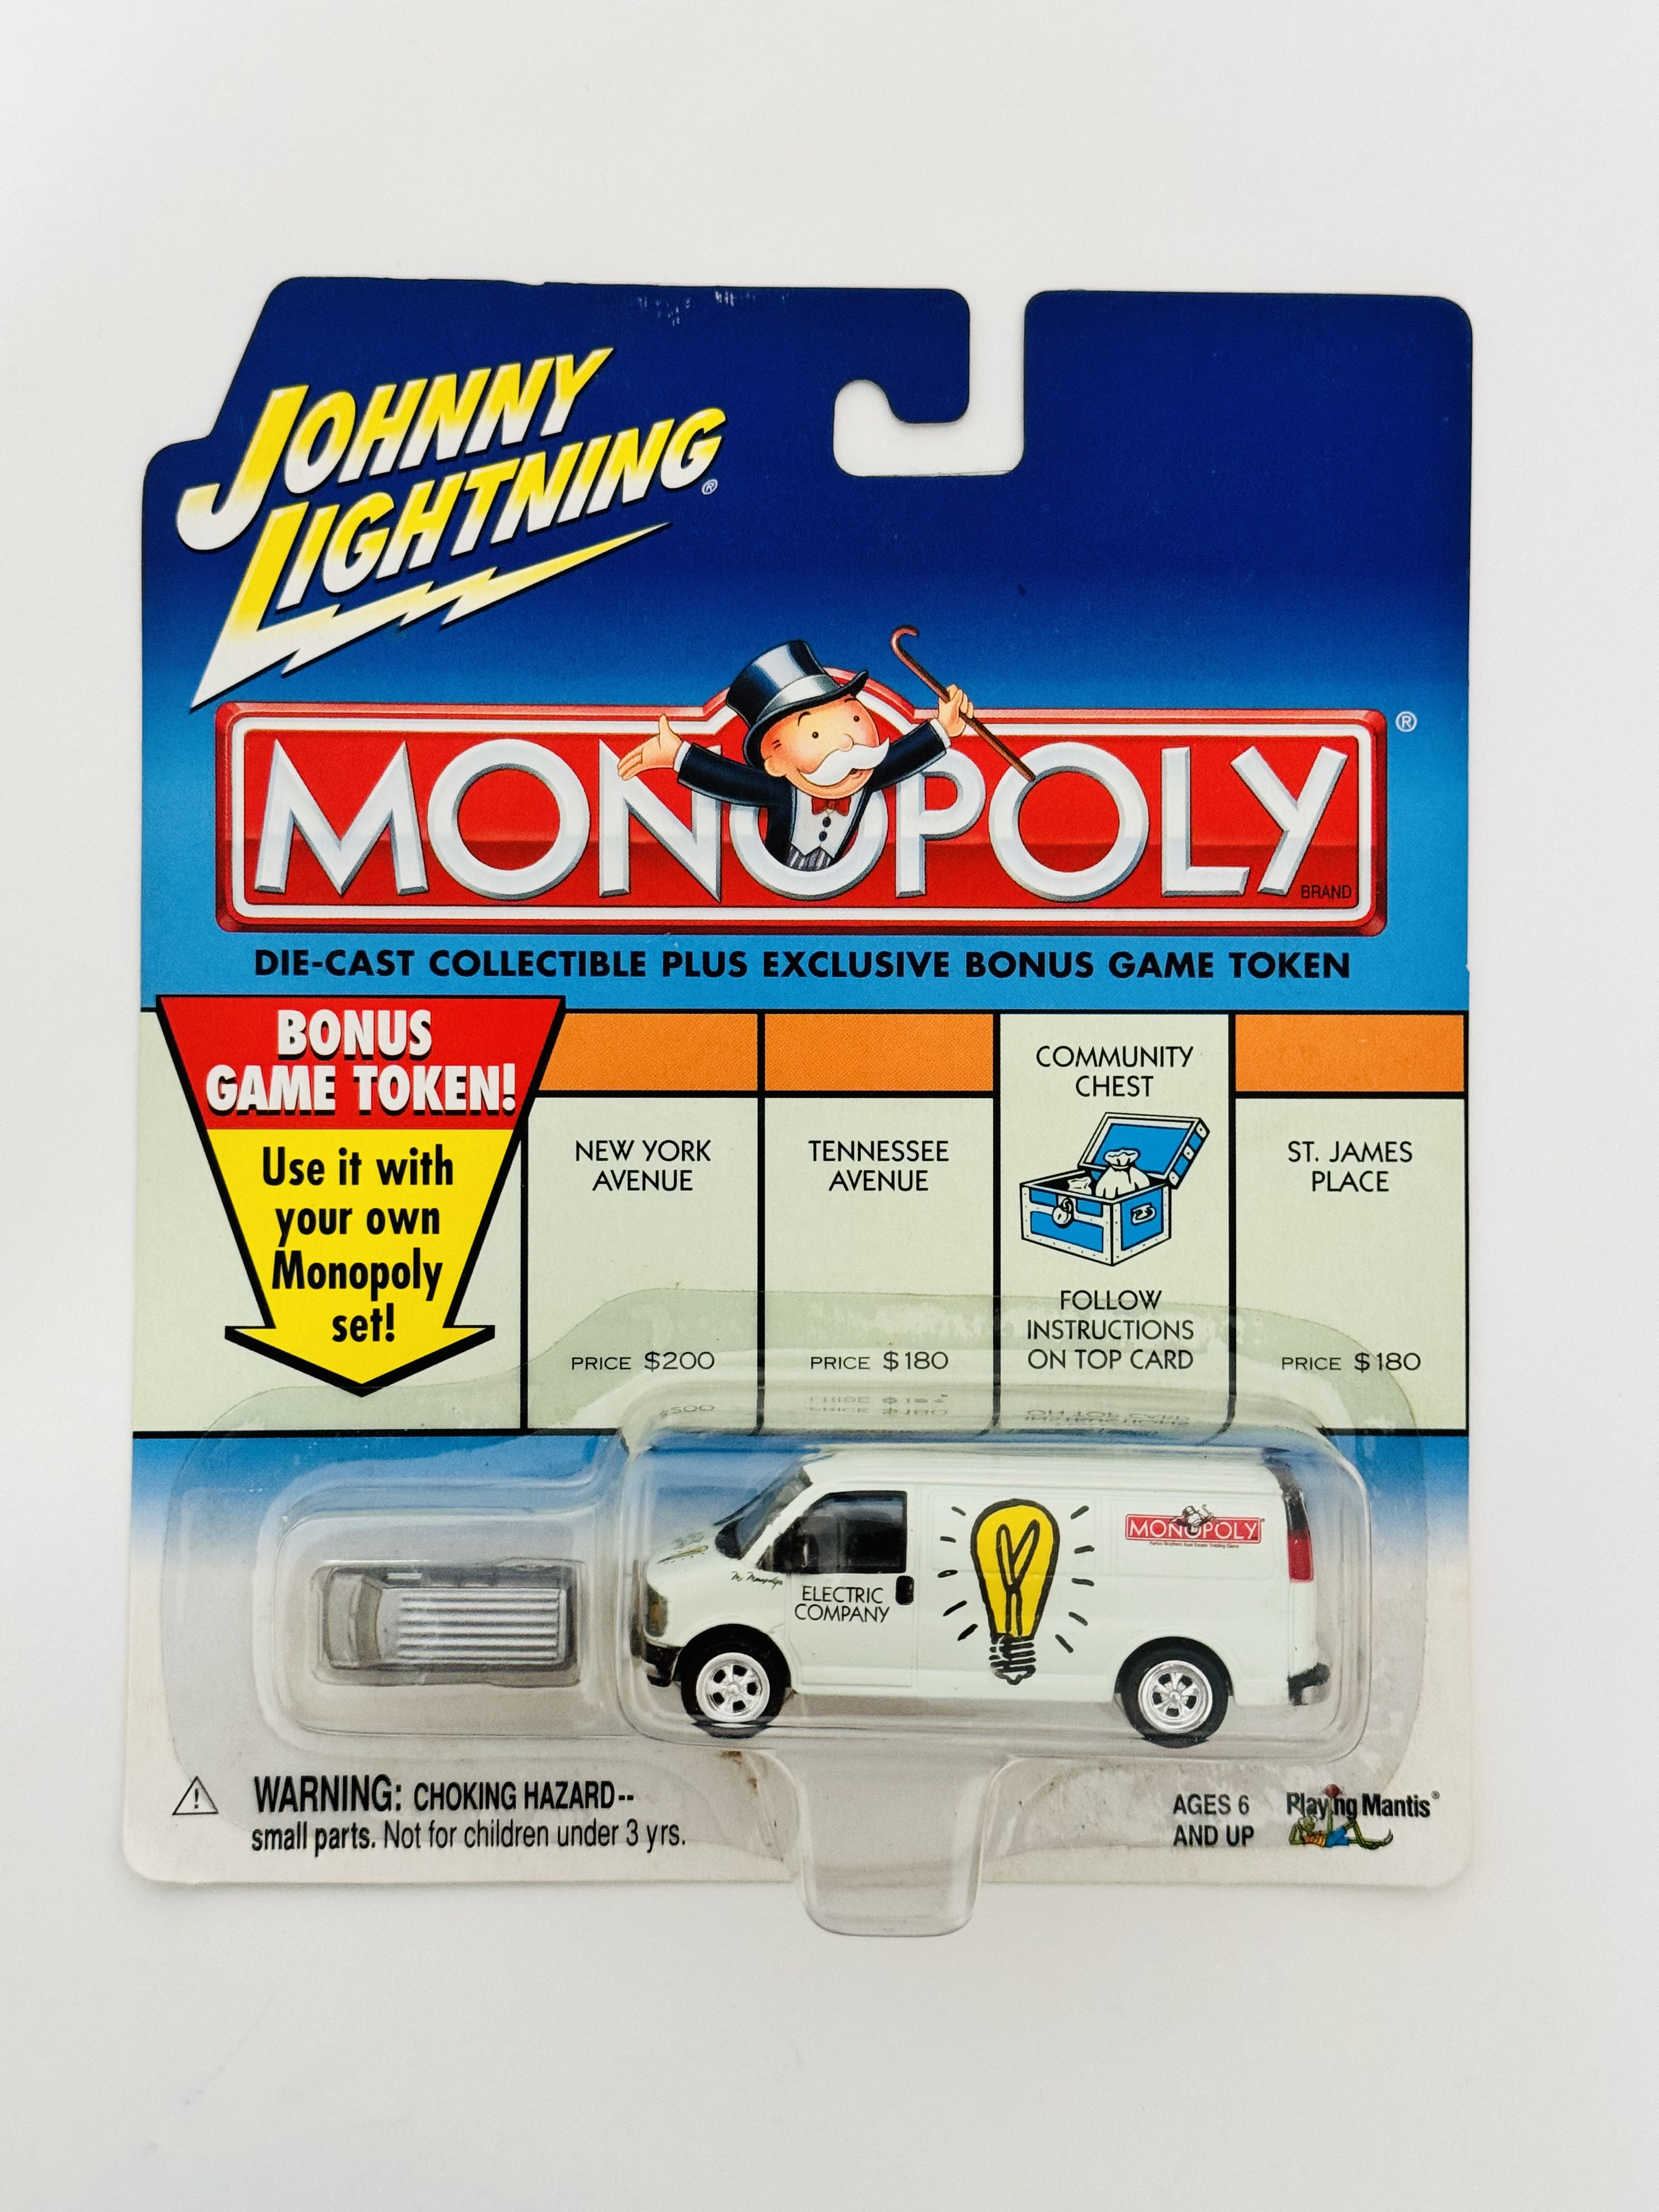 Johnny Lightning Monopoly Electric Company Utility Van